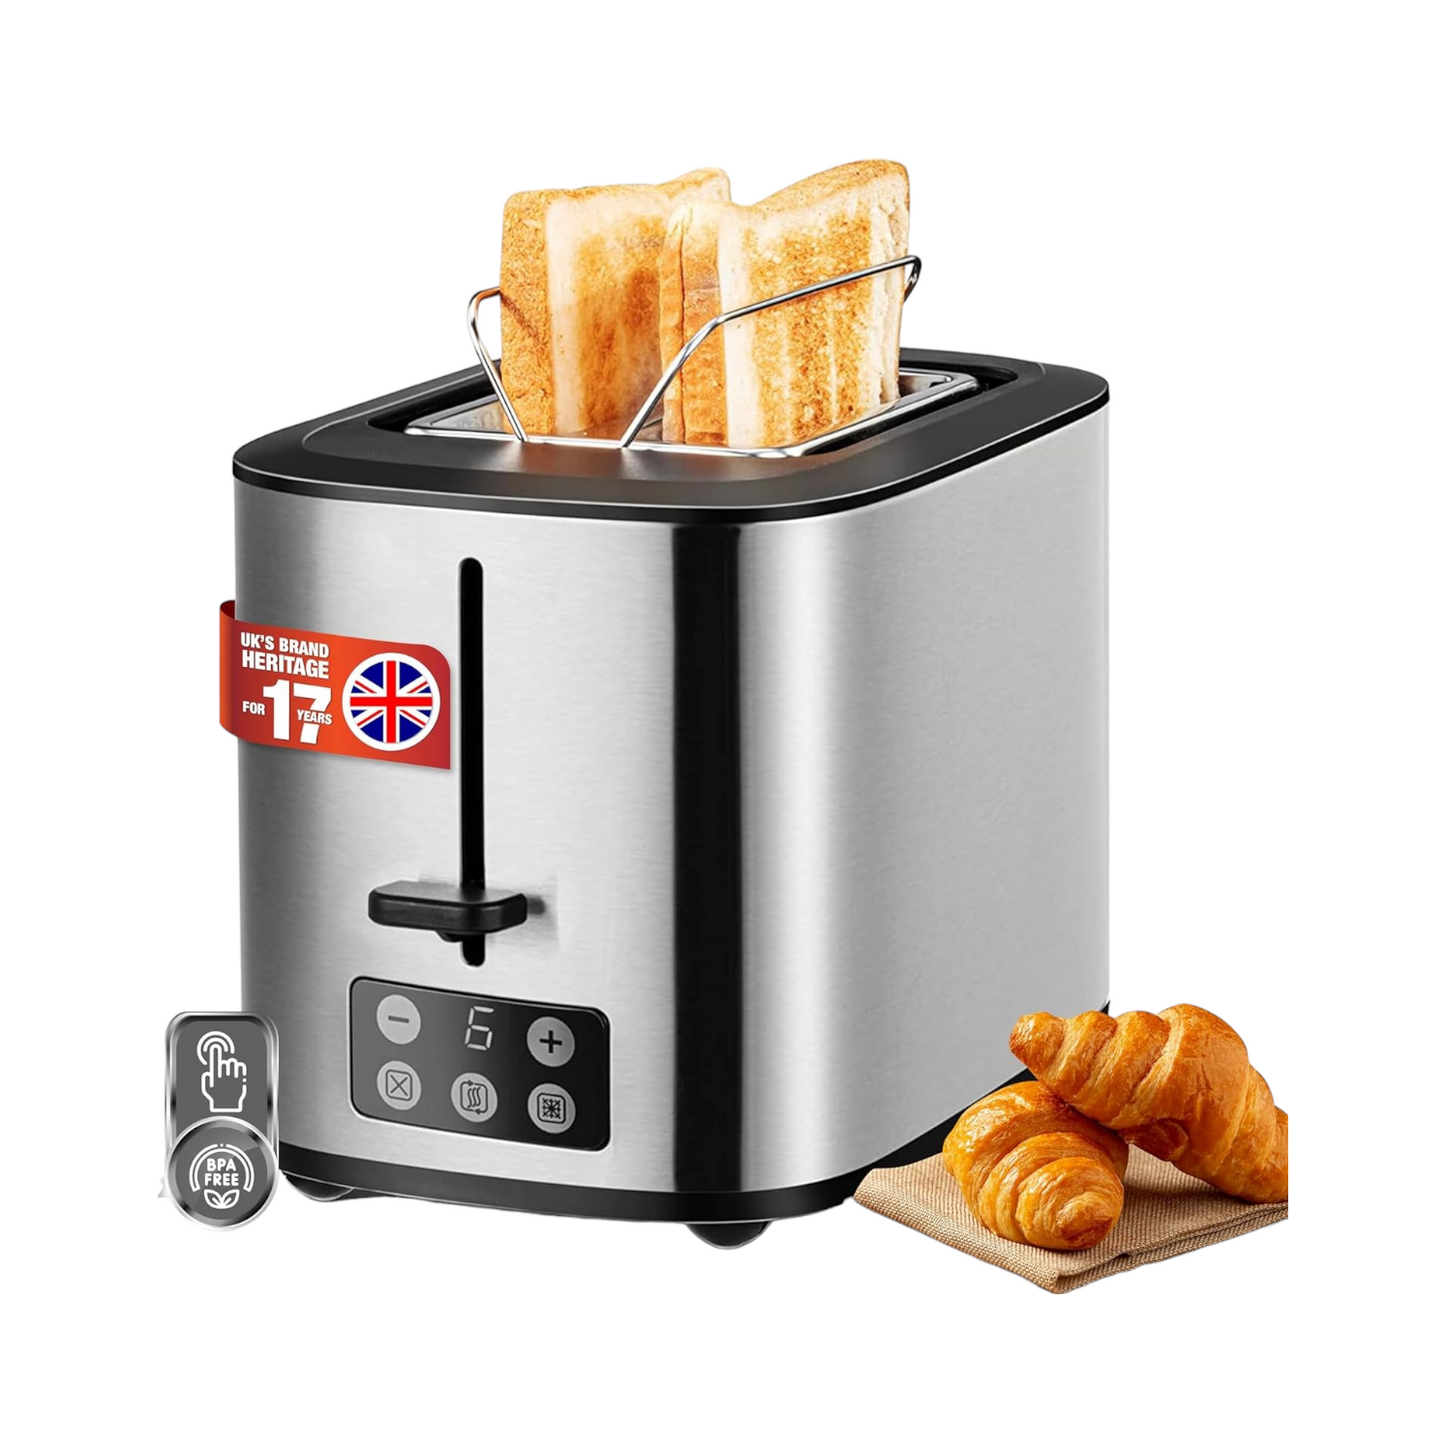 Linsar brand toaster